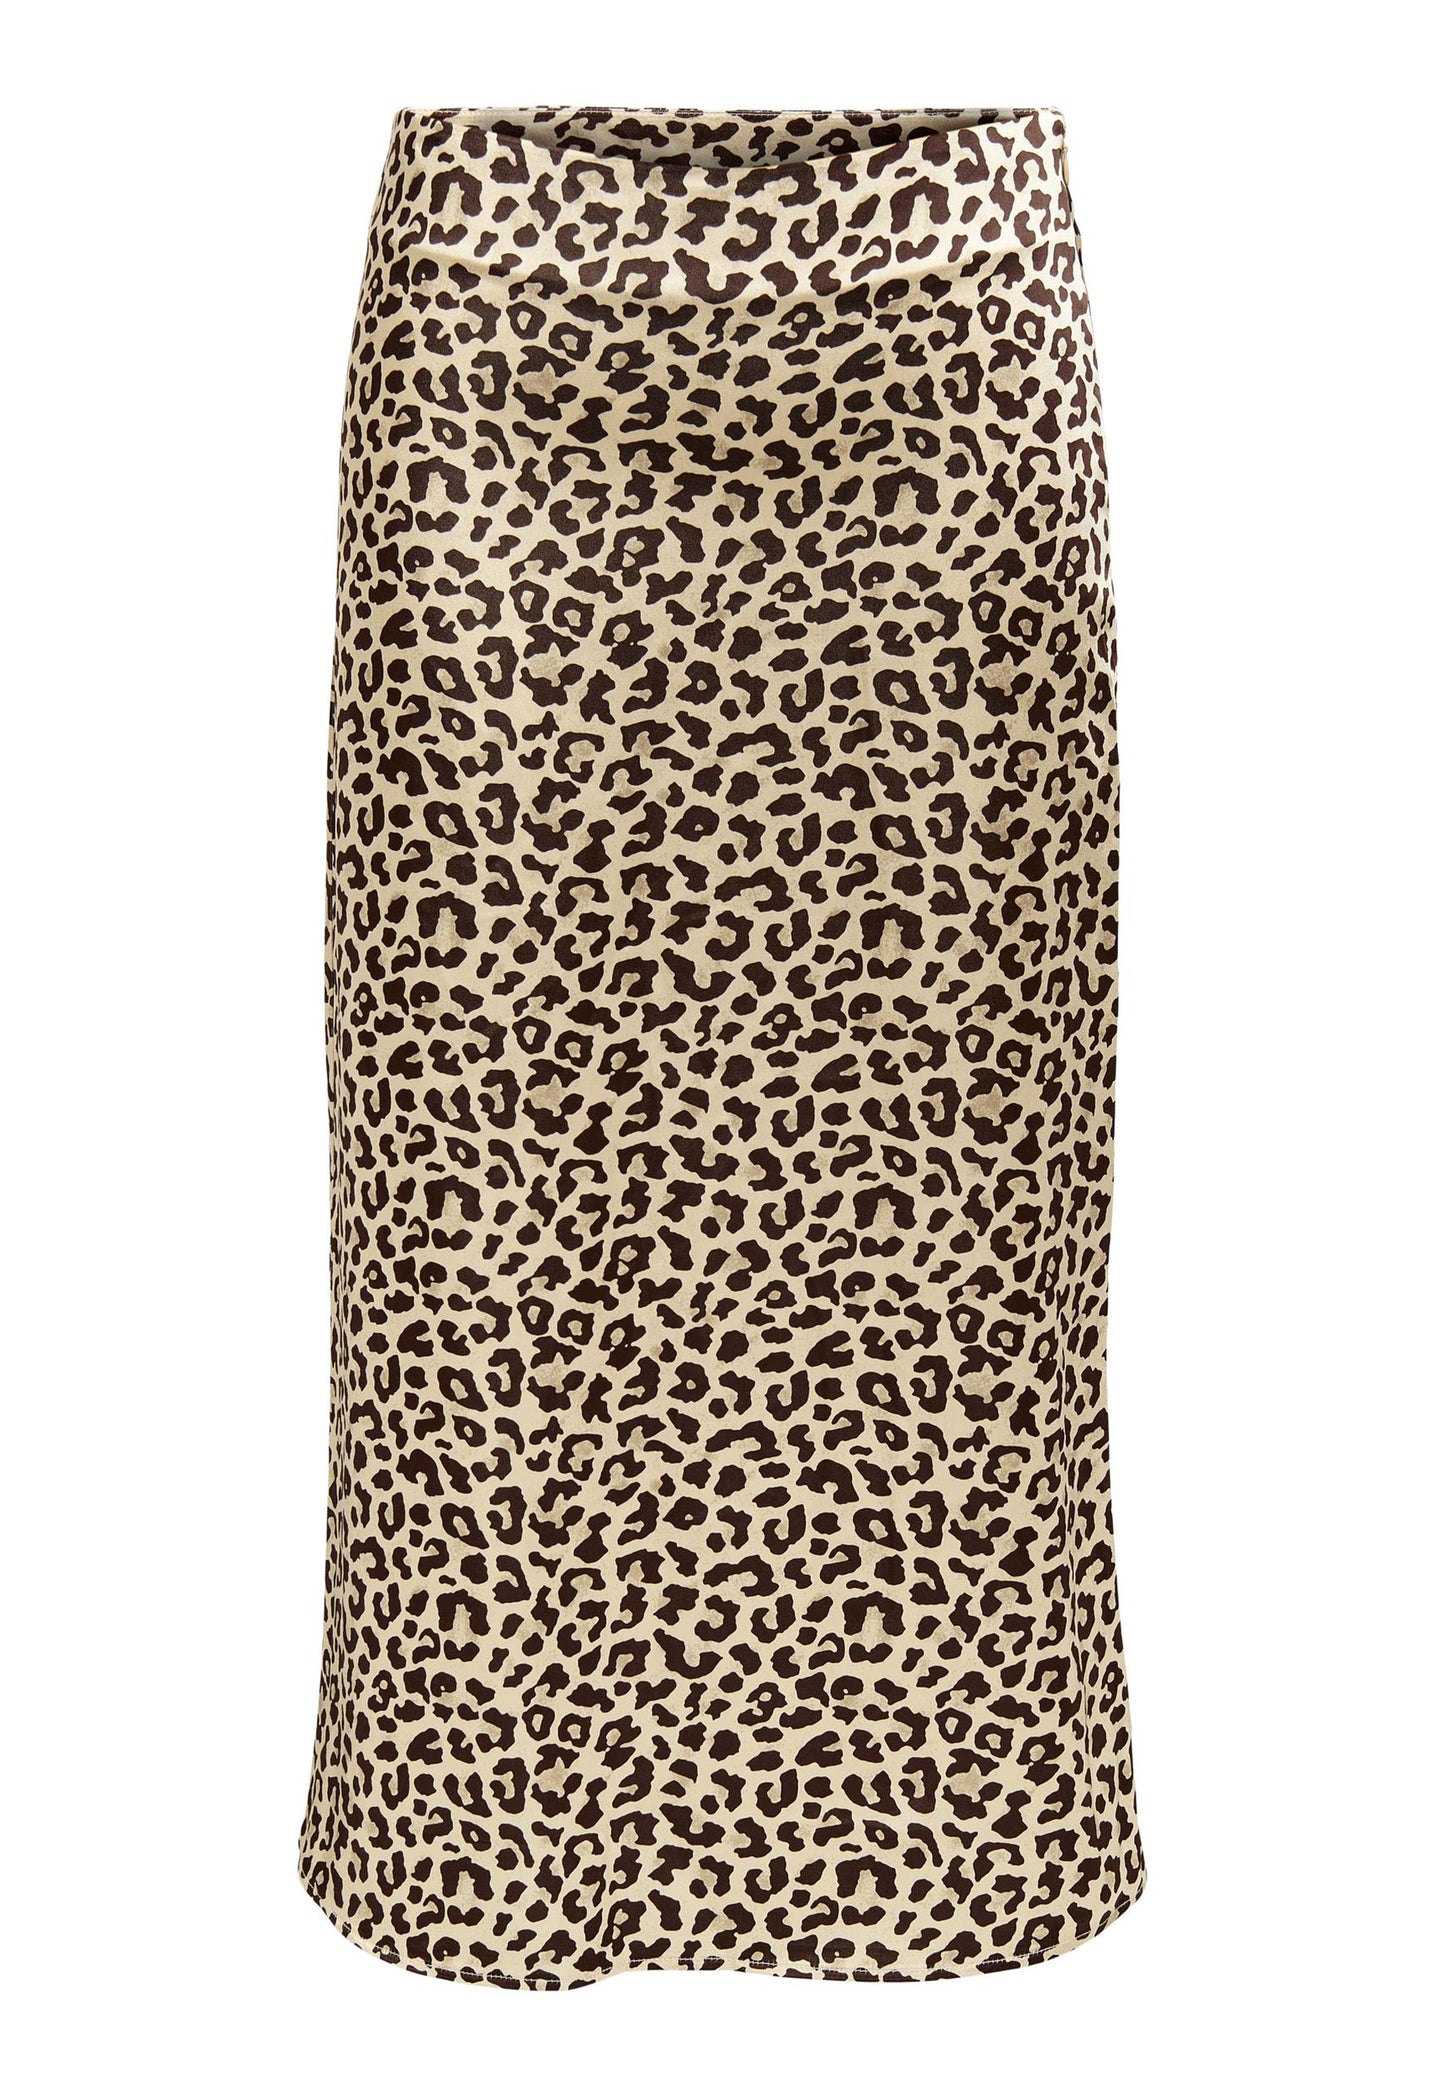 
                  
                    ONLY Mayra Leopard Print Satin Midi Slip Skirt in Beige & Black - One Nation Clothing
                  
                